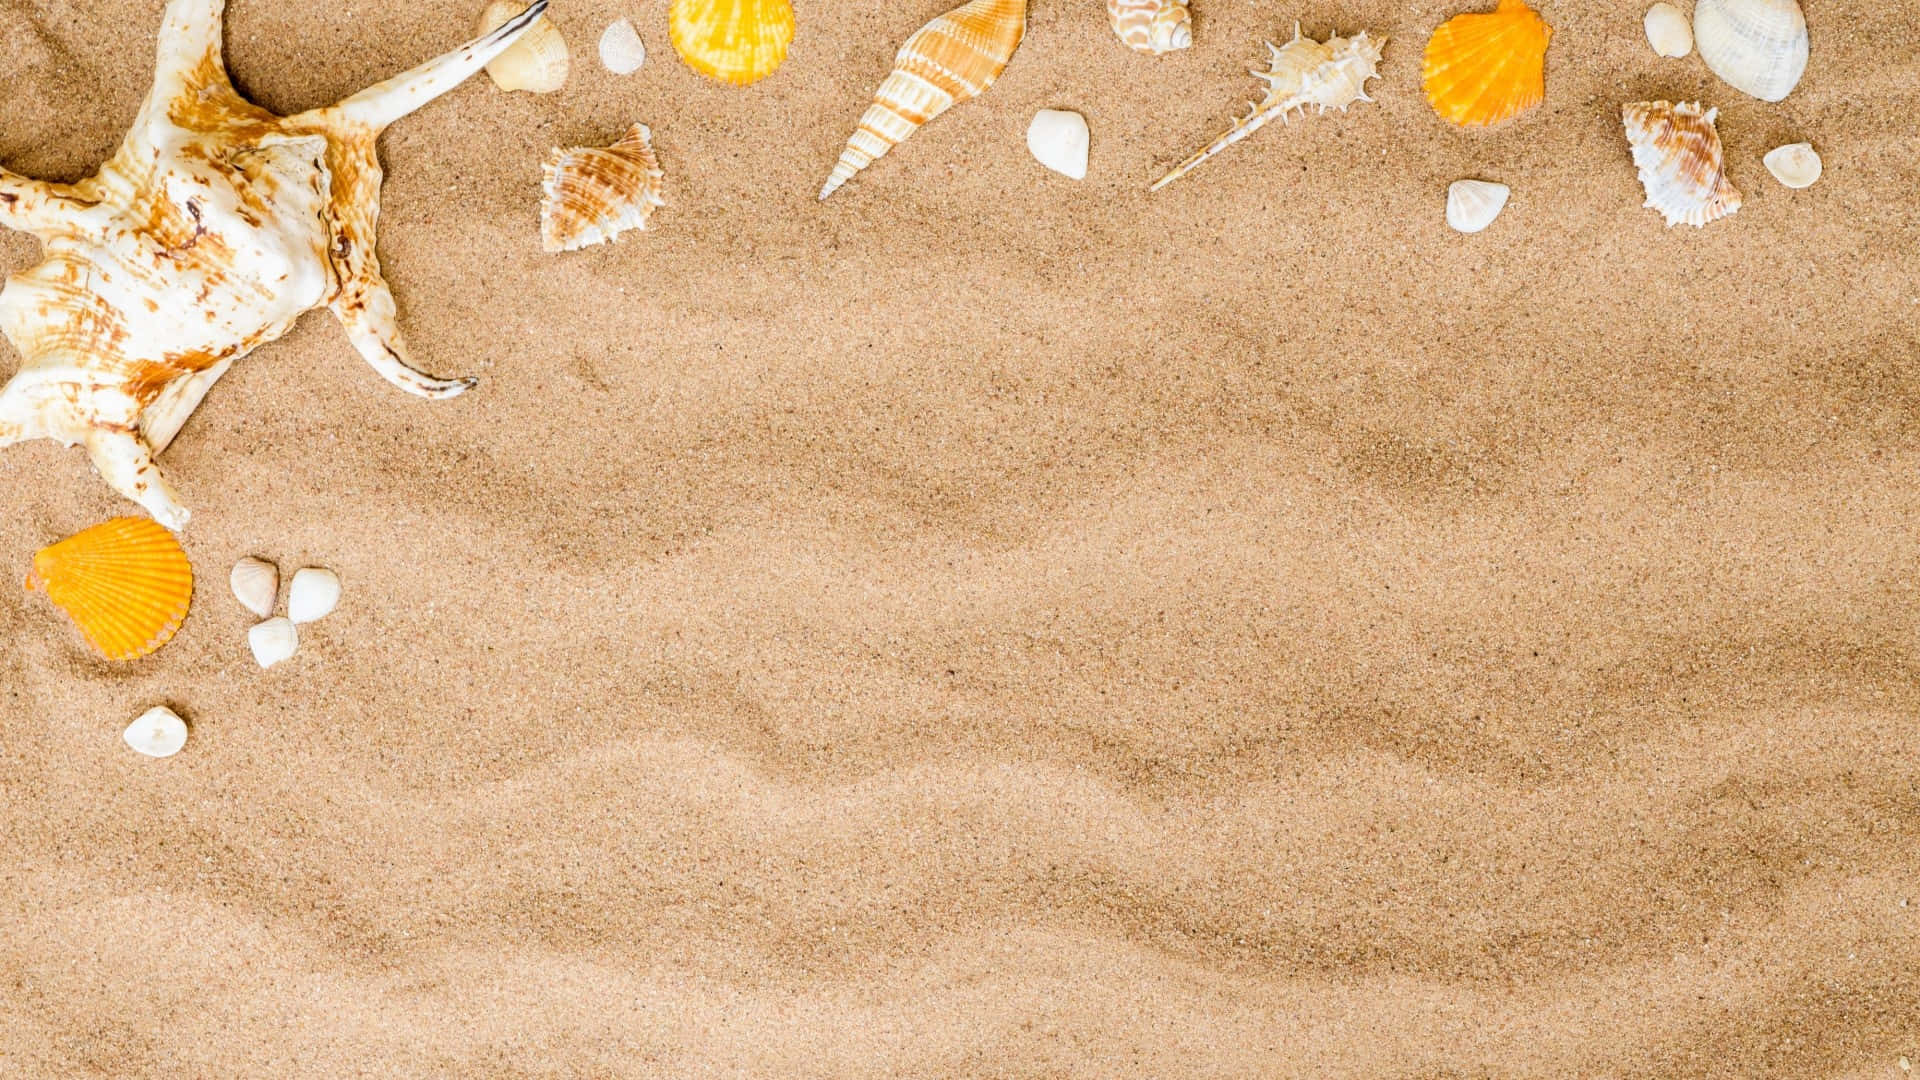 Splendid sandy beach for your summer relaxation.